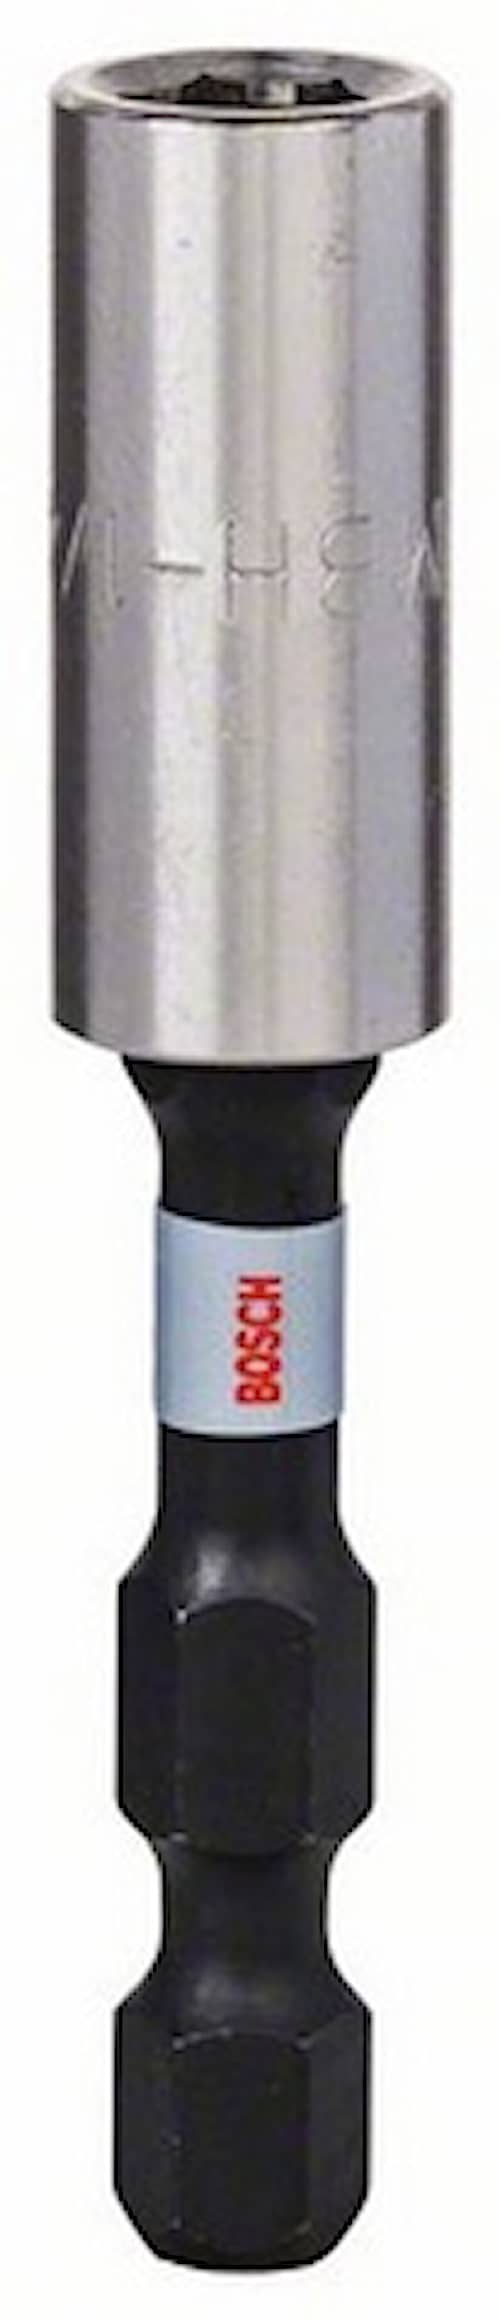 Bosch Impact Control bitsholder standard, 1 stk. 1/4", L 60 mm